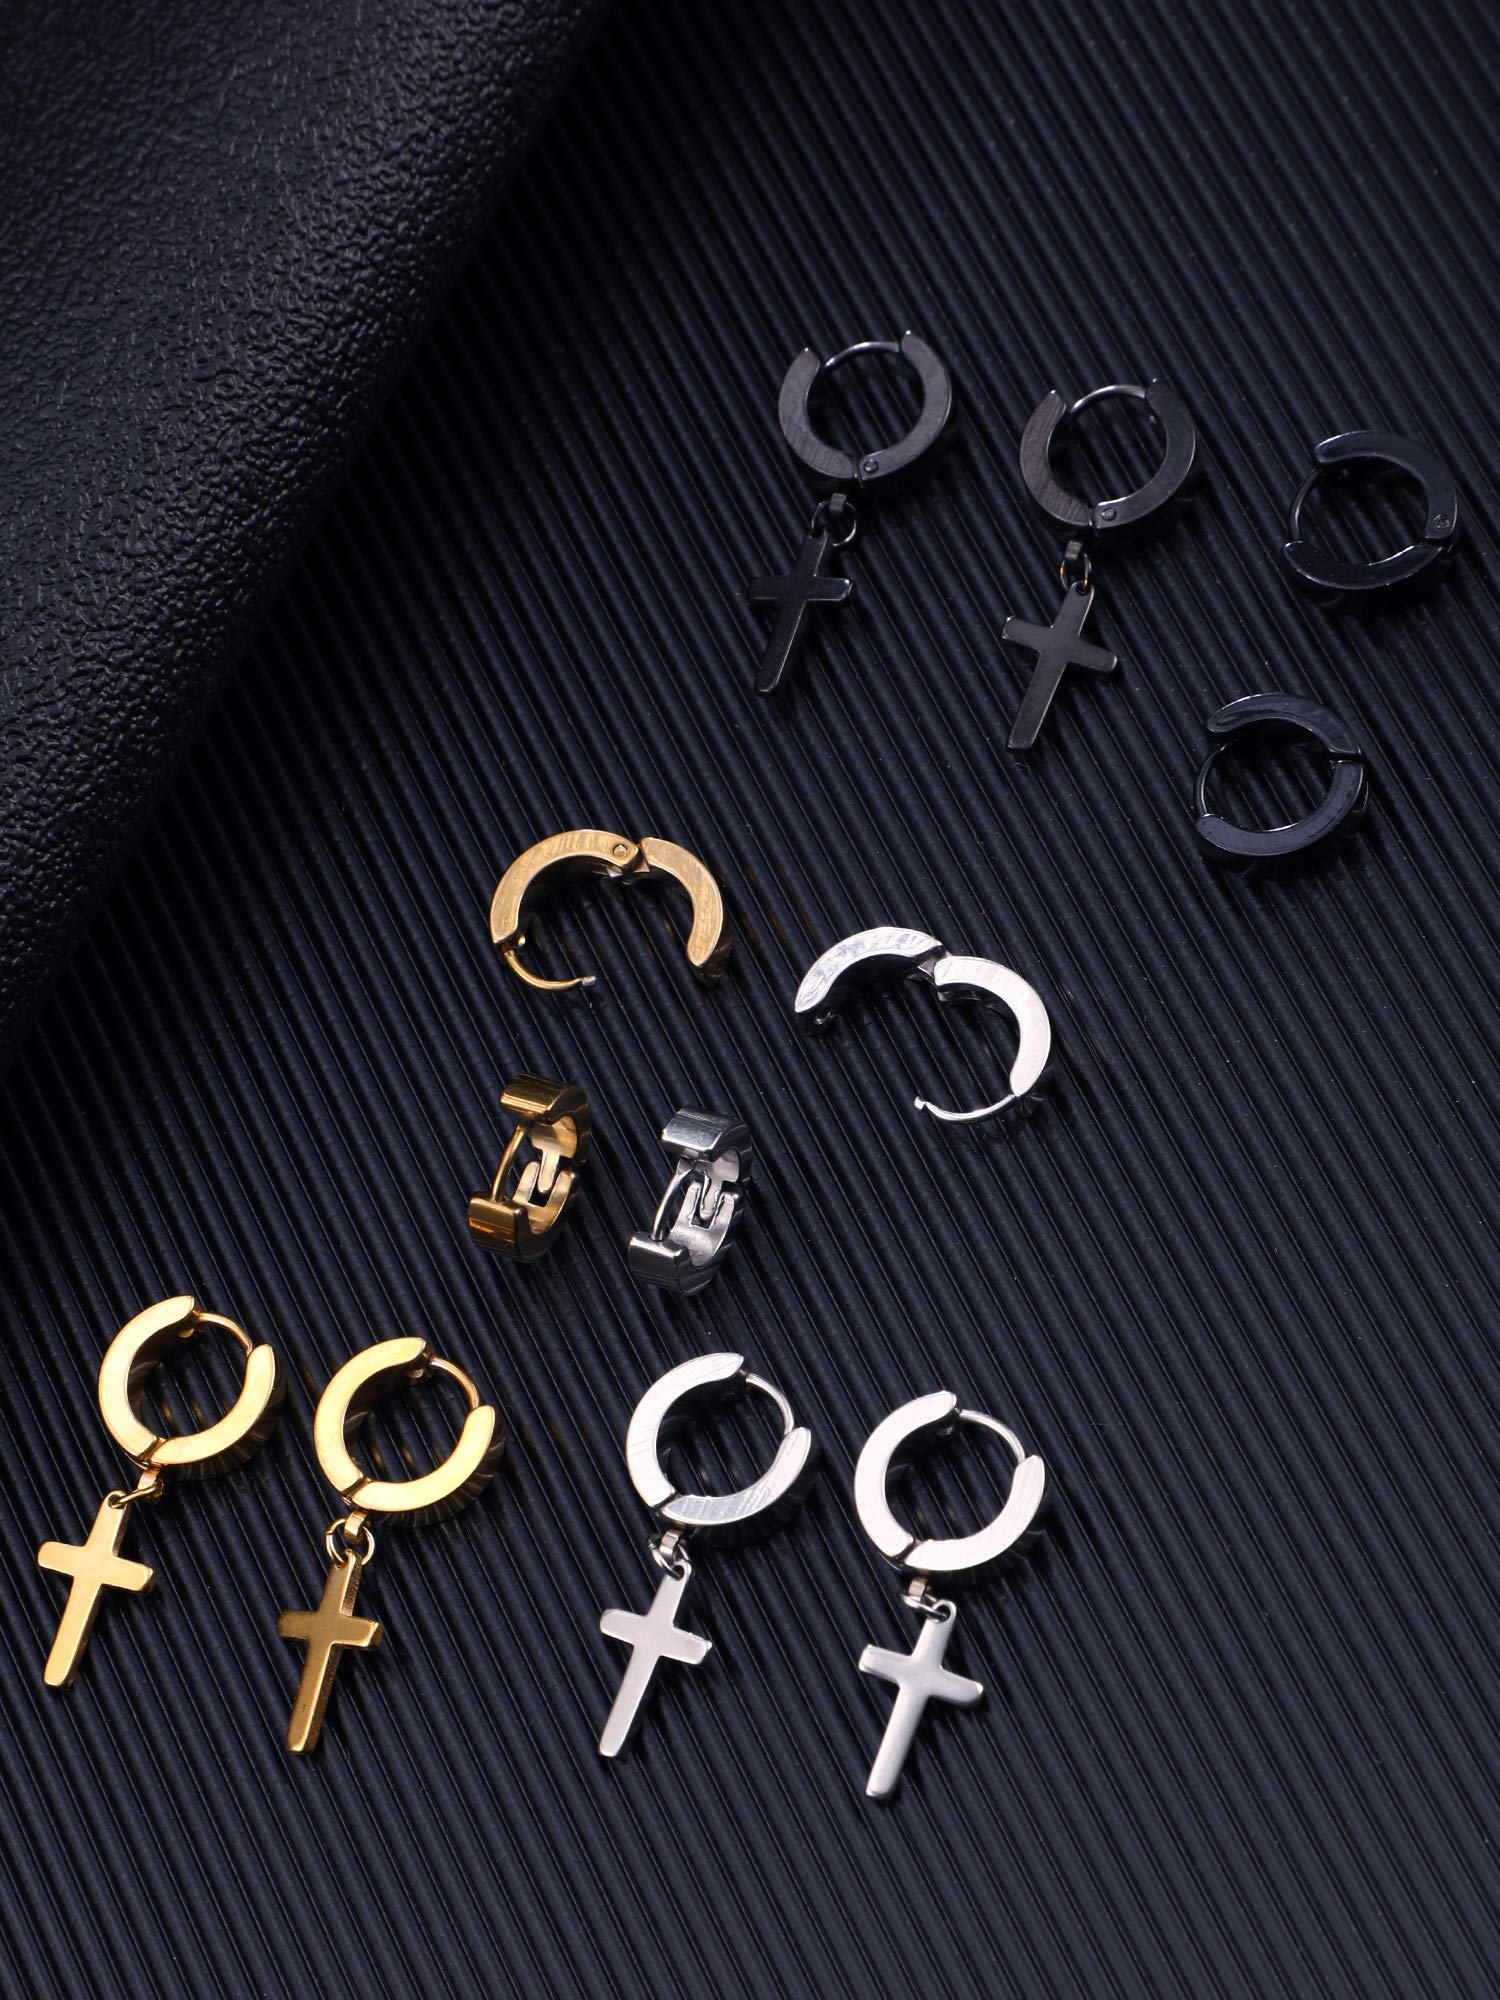 6 Pairs of Cross Earrings Dangle Hinged Stainless Steel Hoop and Stud for Men Women Wearing (Style Set 1)